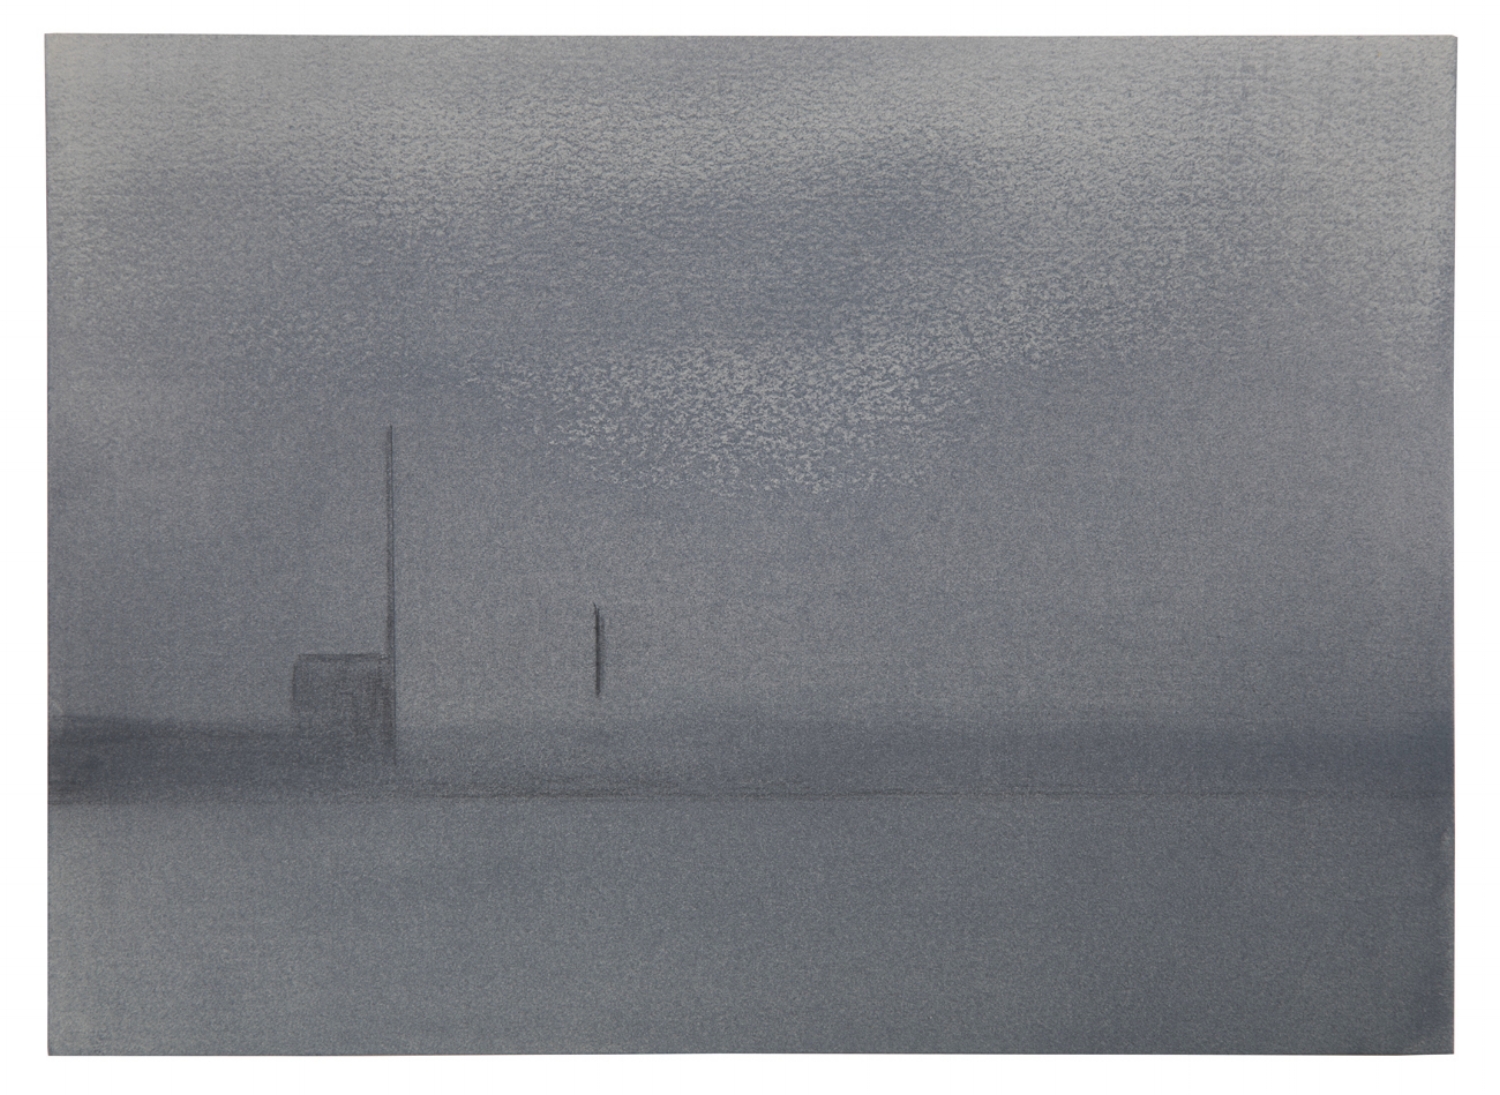  Landmark 1, Oil and graphite on Arches Oil Paper, 22.5 x 31cm ( framed size 41 x 49.5cm) 